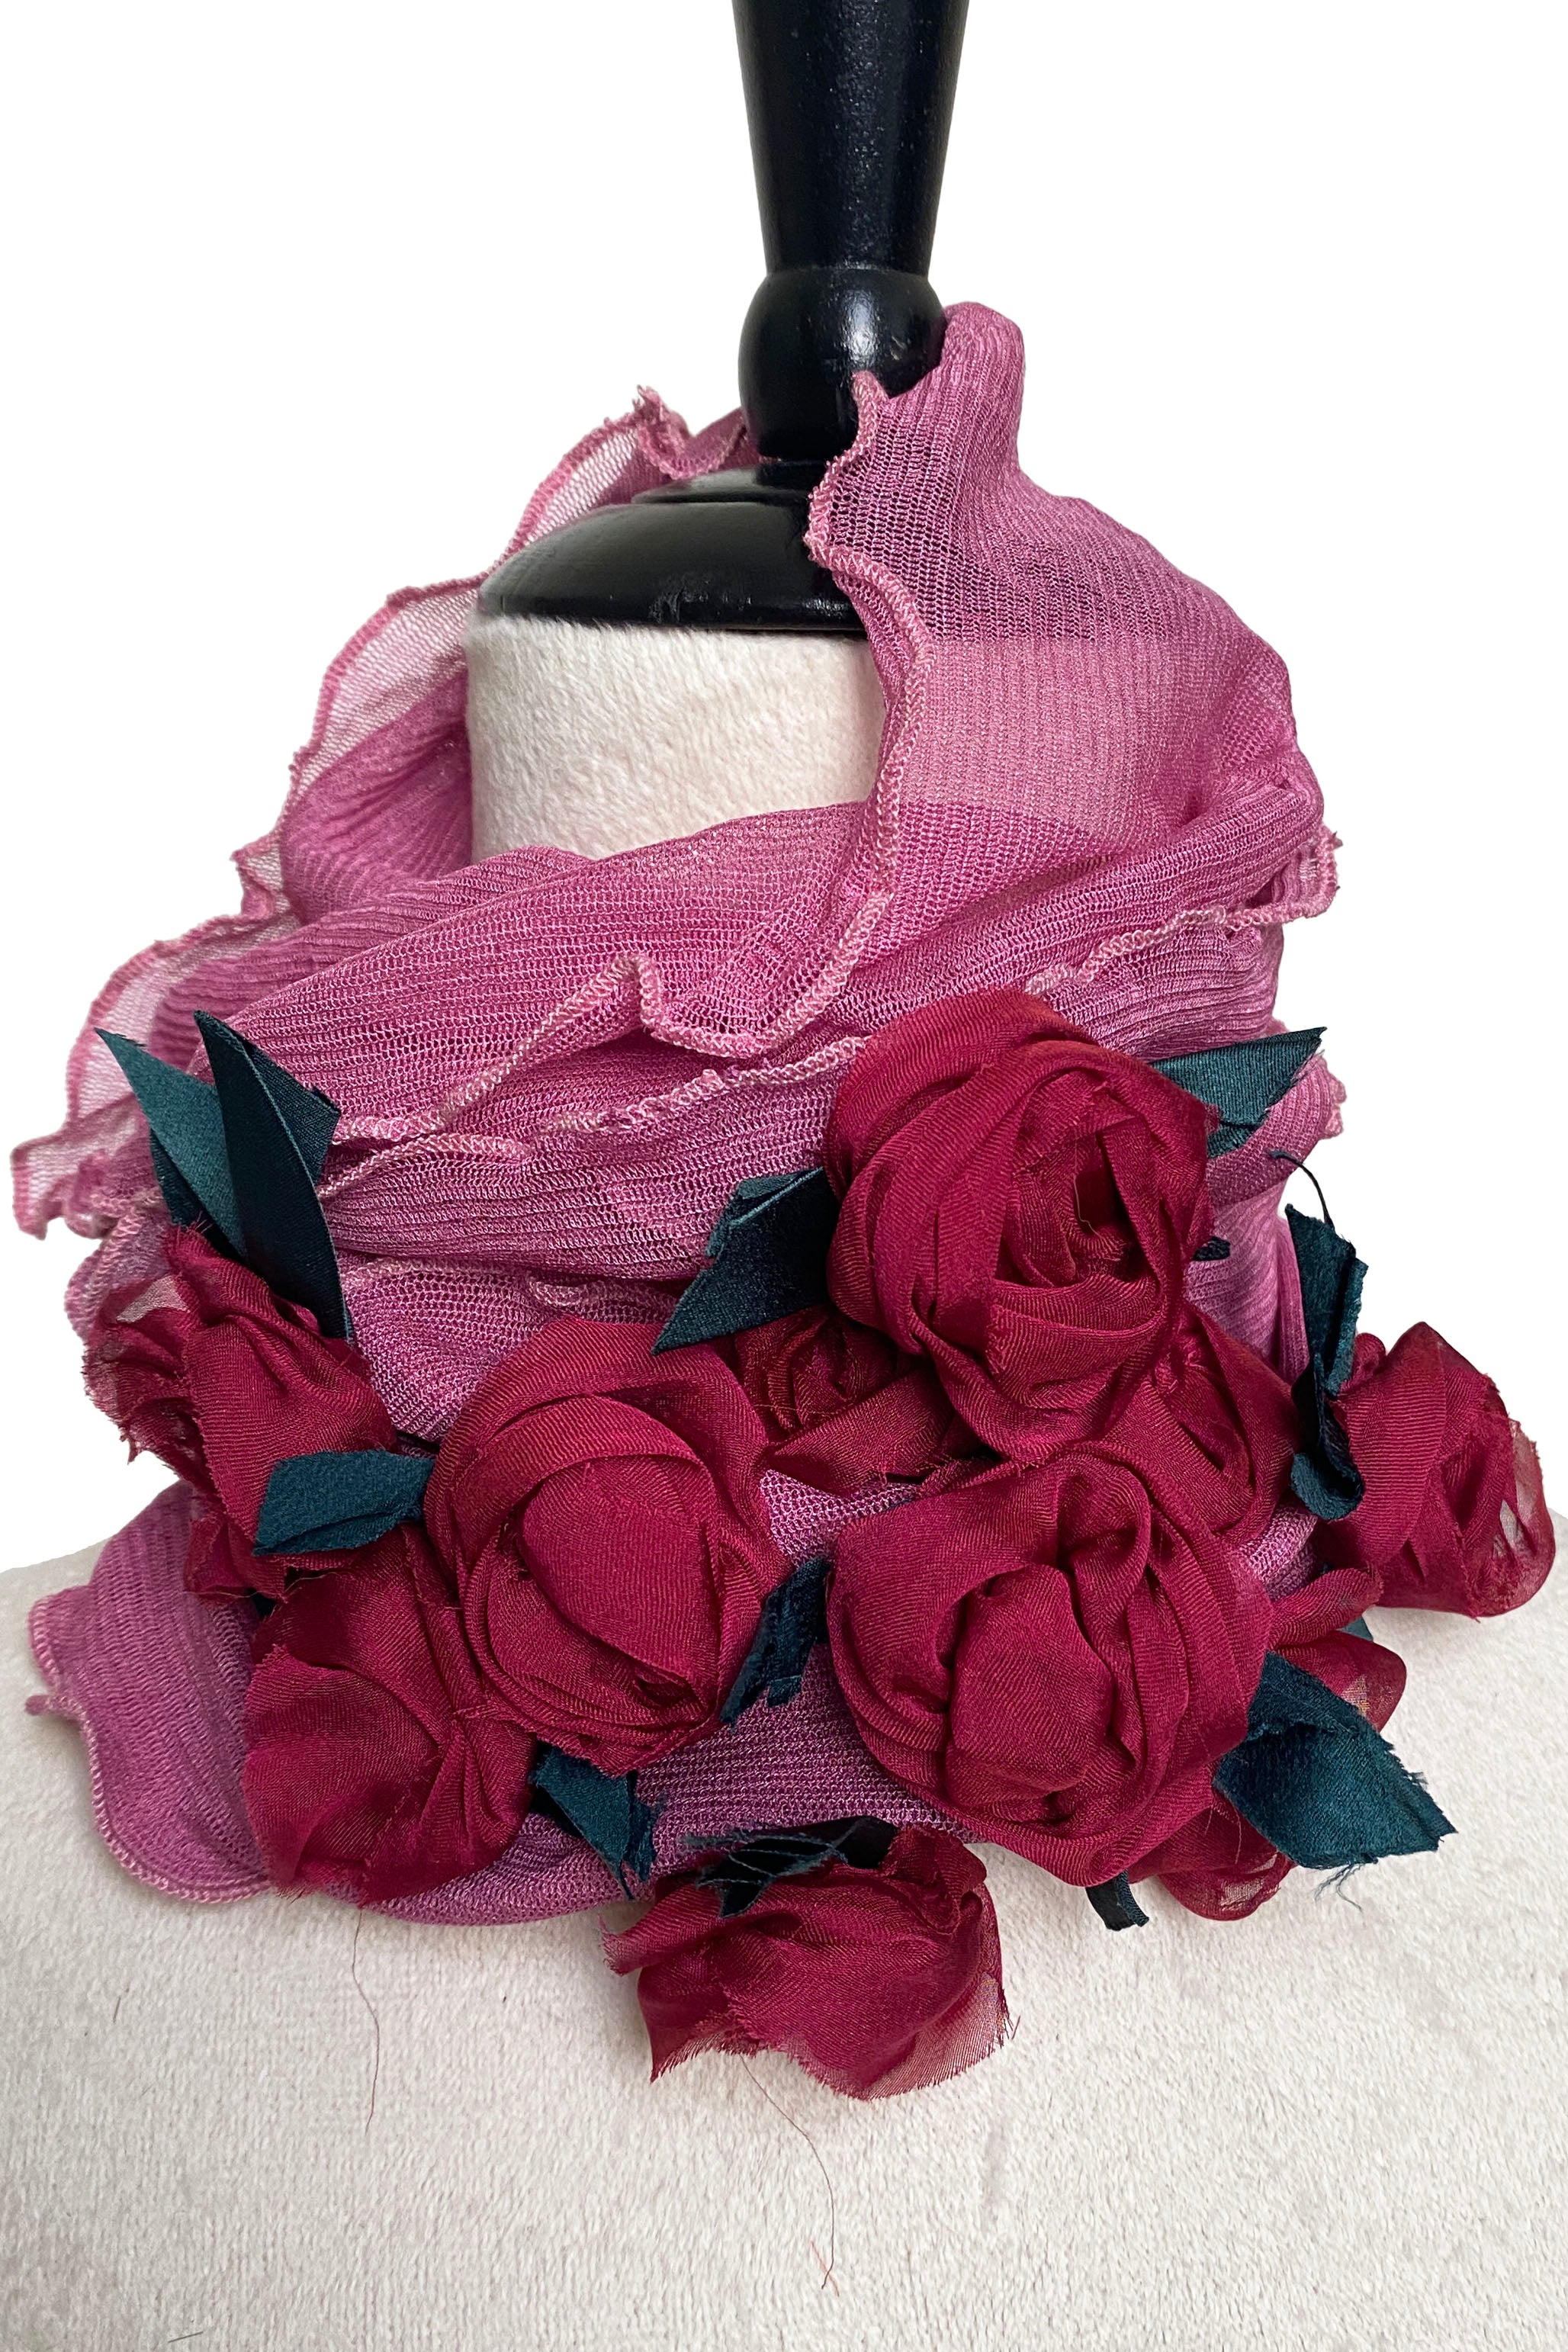 Flower Collar Headband - Pink w/ Red